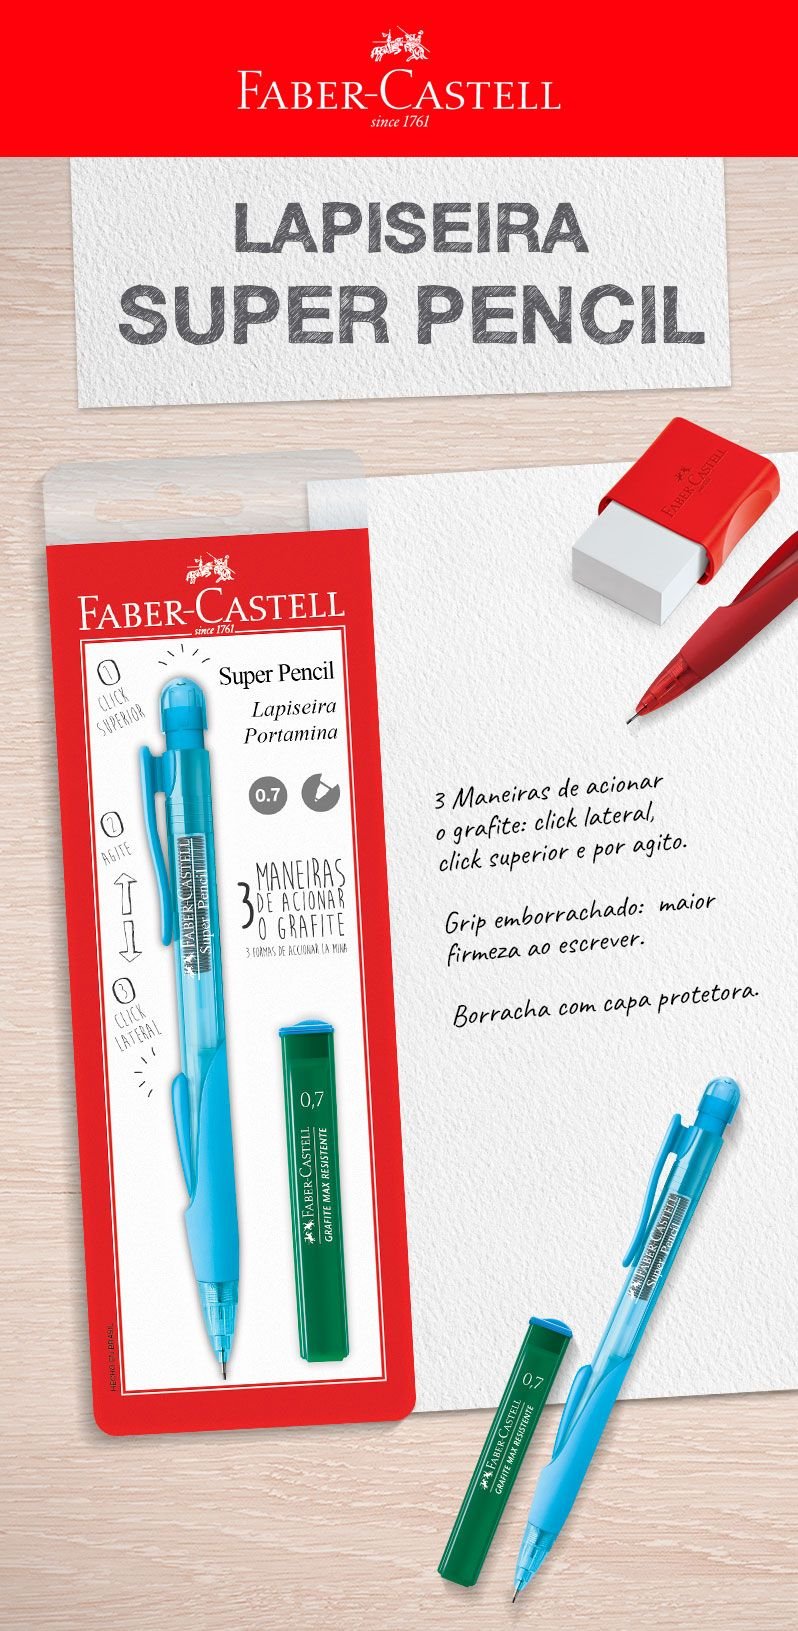 Lapiseira 0.7mm super pencil SM07LSP Faber Castell